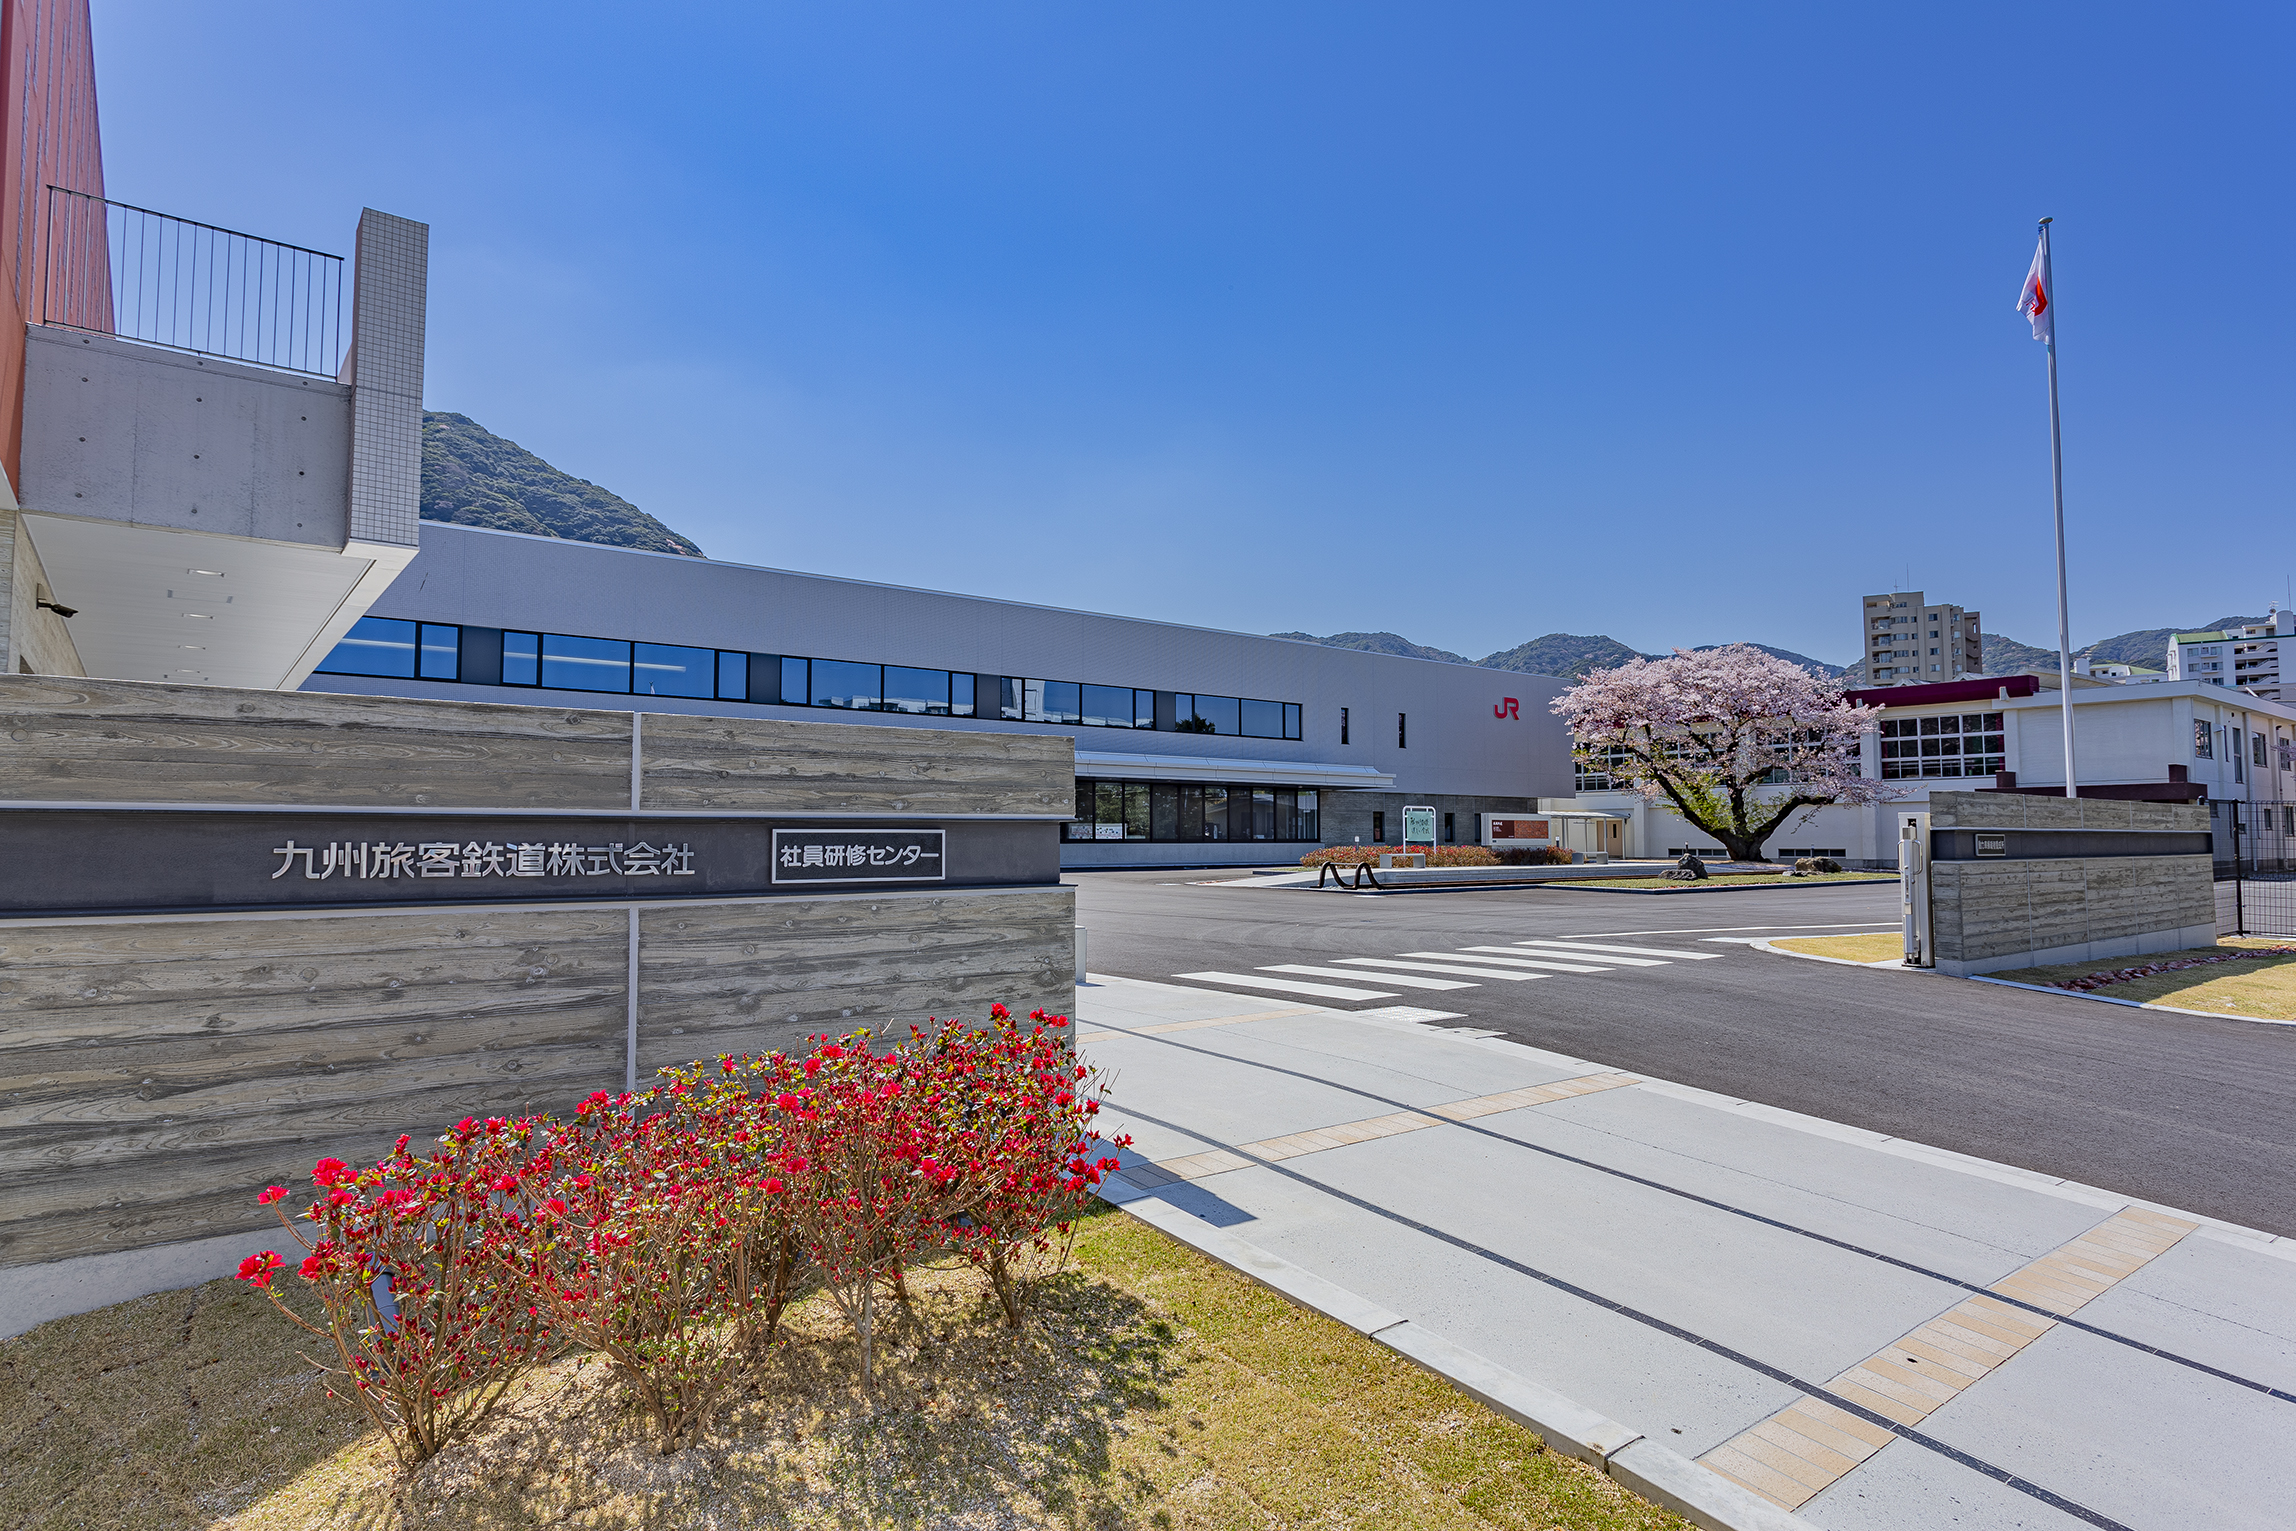 JR Kyushu Employee Training Center